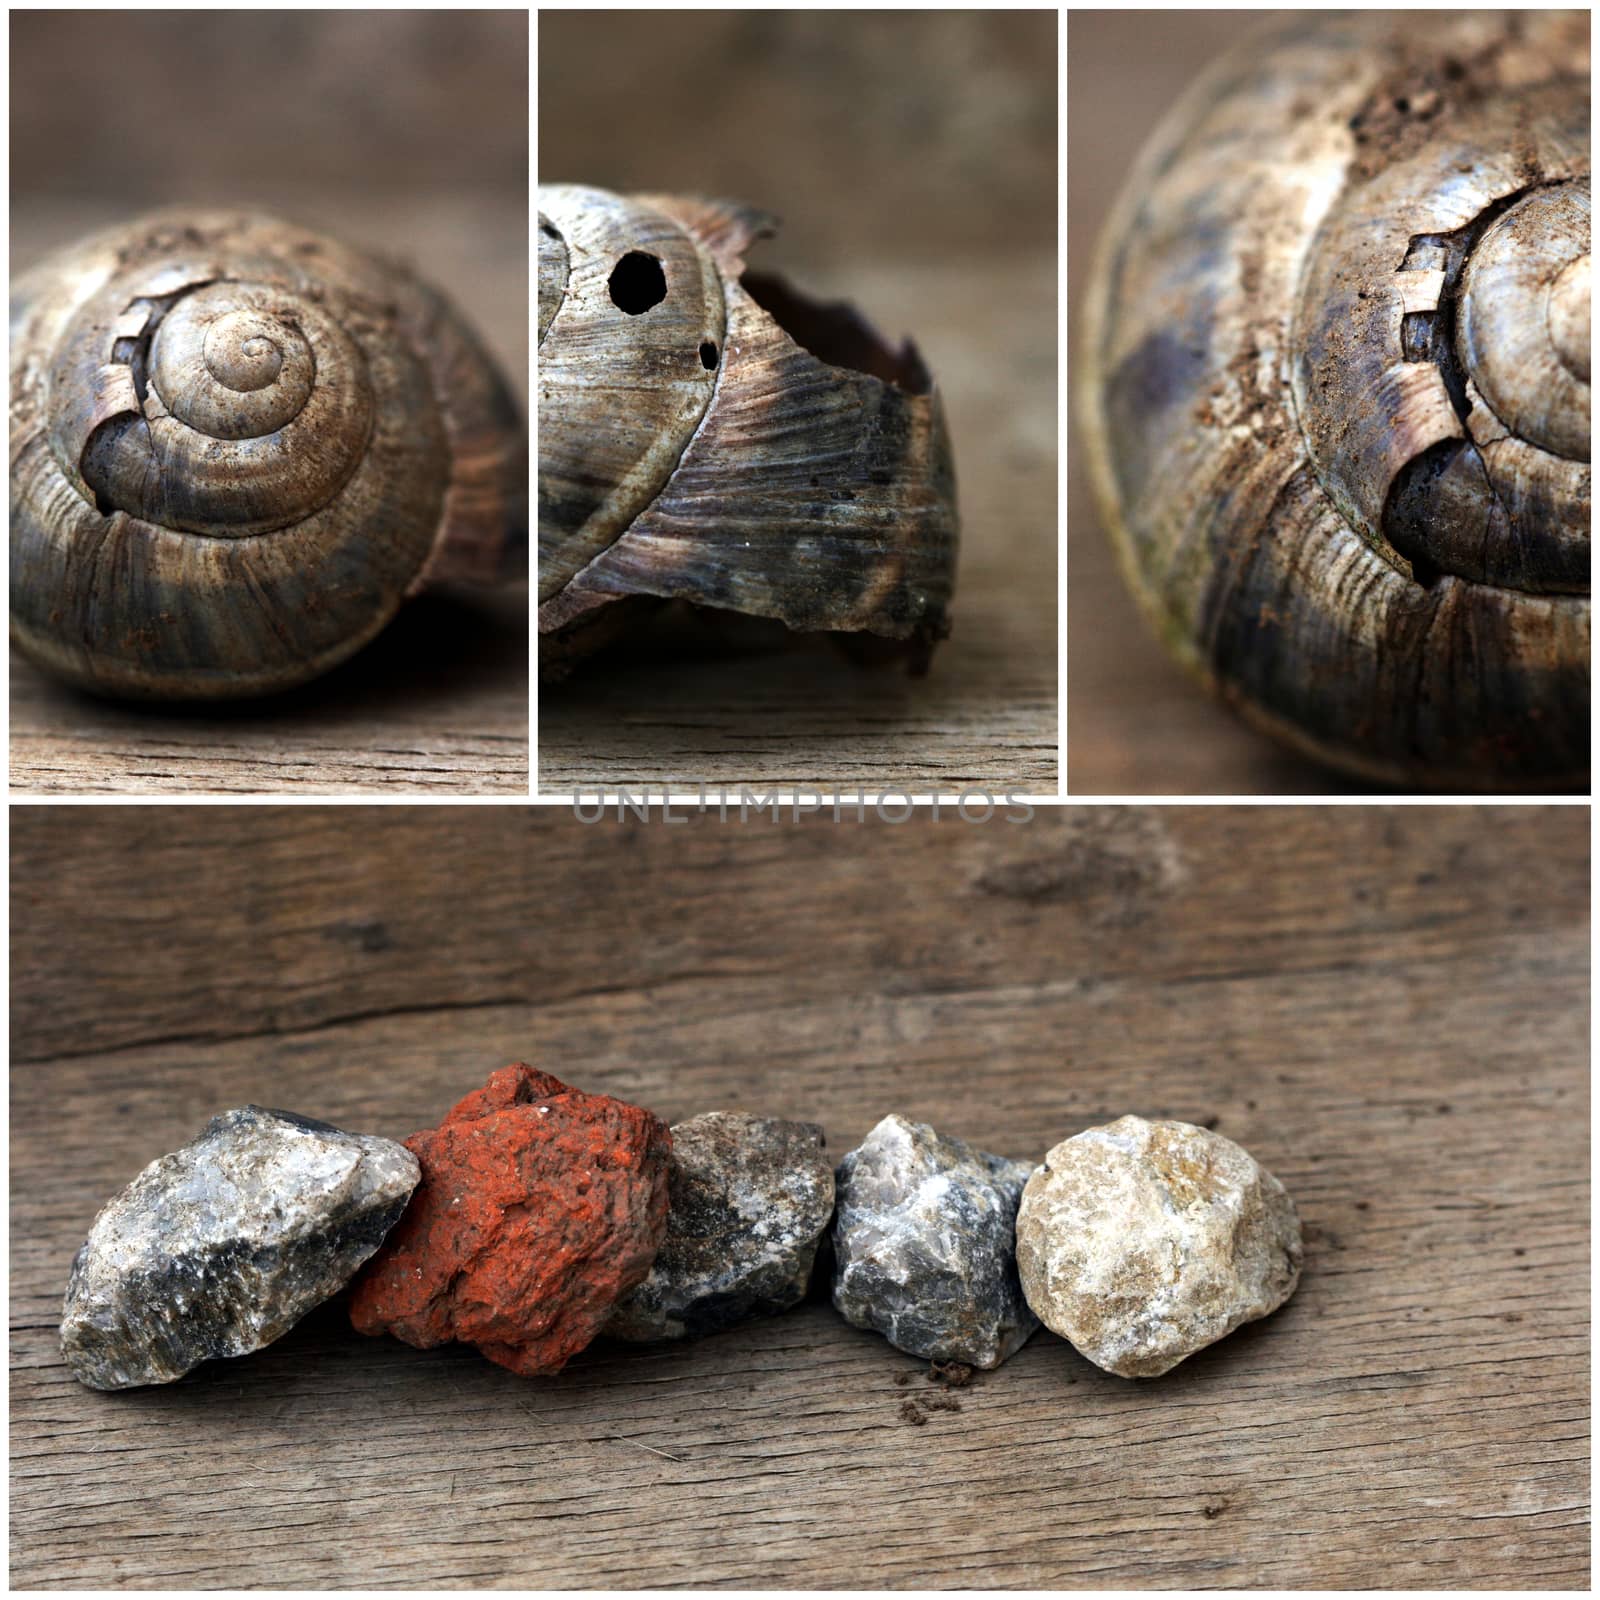 Empty snail shells by nehru